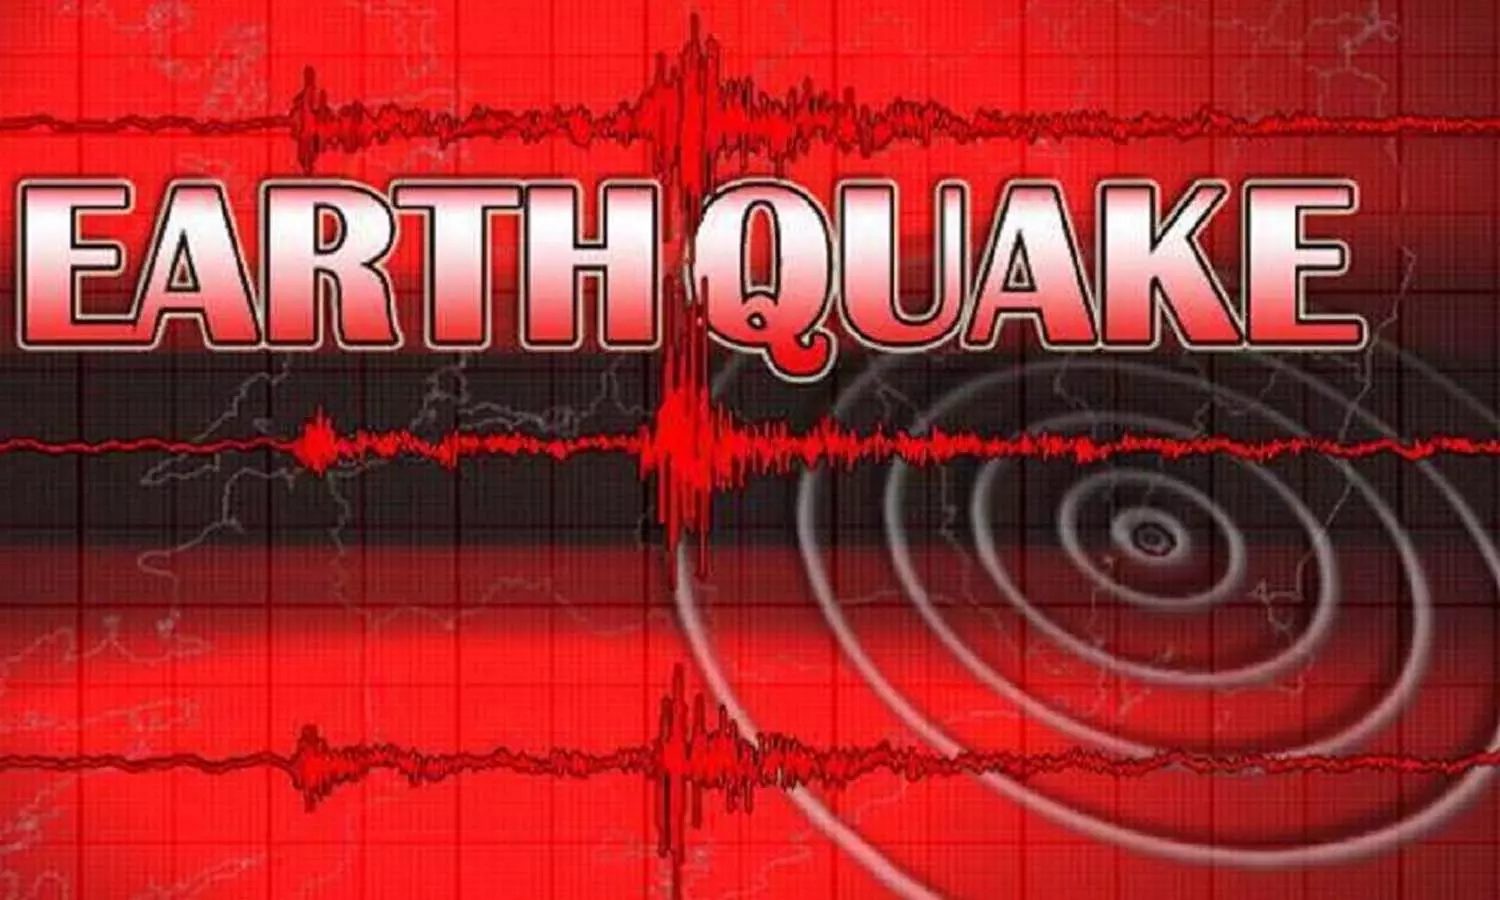 Earthquake tremors in Chamba, Himachal Pradesh, intensity was 5.3